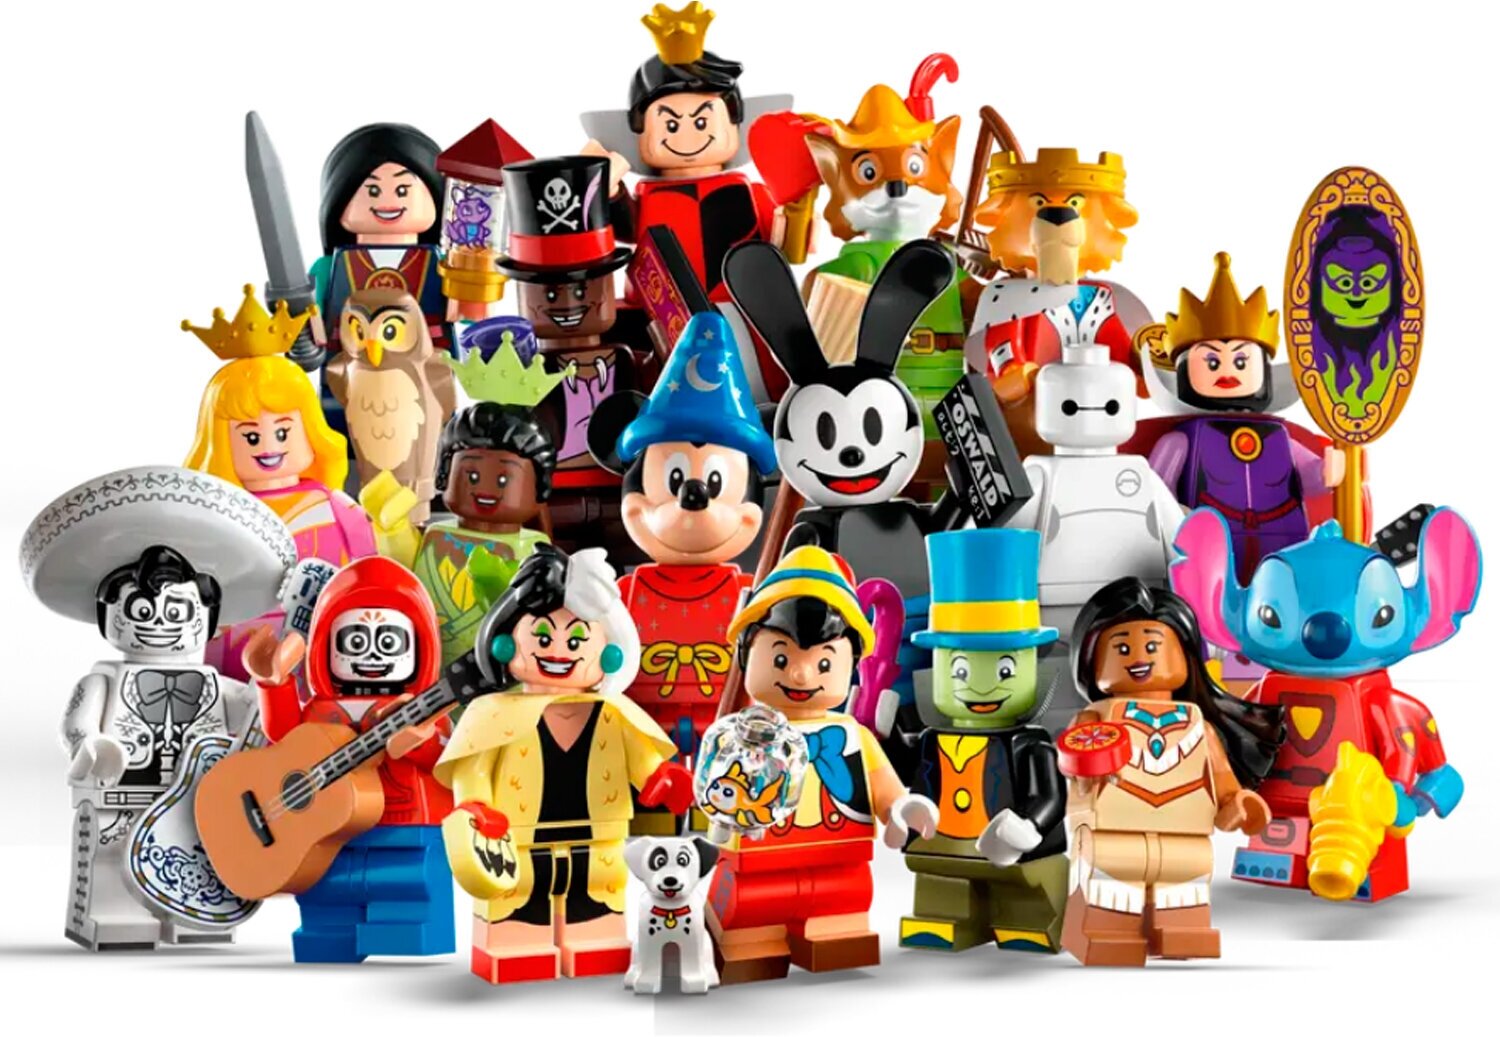 Минифигурка LEGO 71038 Minifigures Disney 100 Years